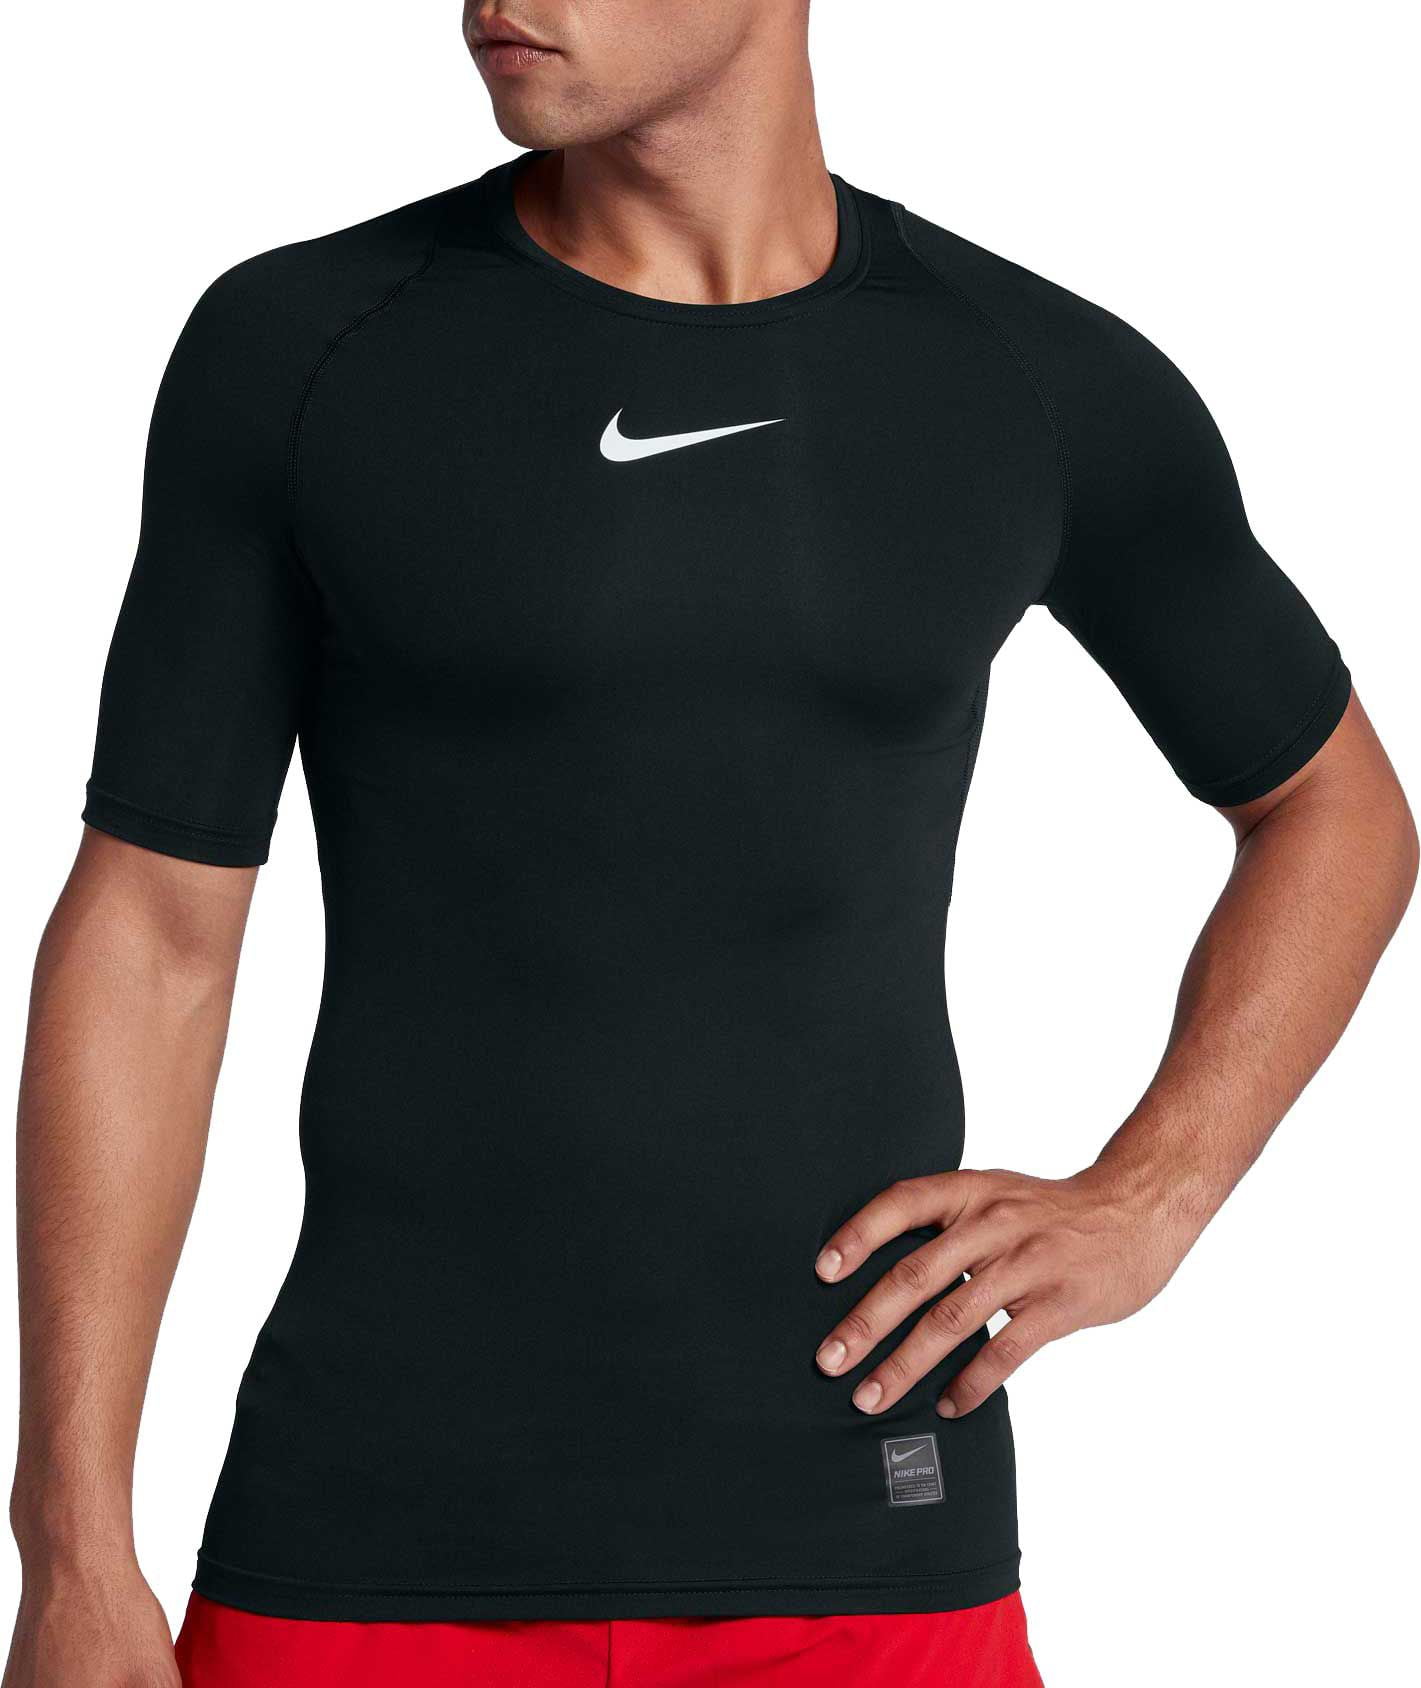 Nike Men's Pro Compression Short Sleeve Training Top 838091-010 Black 